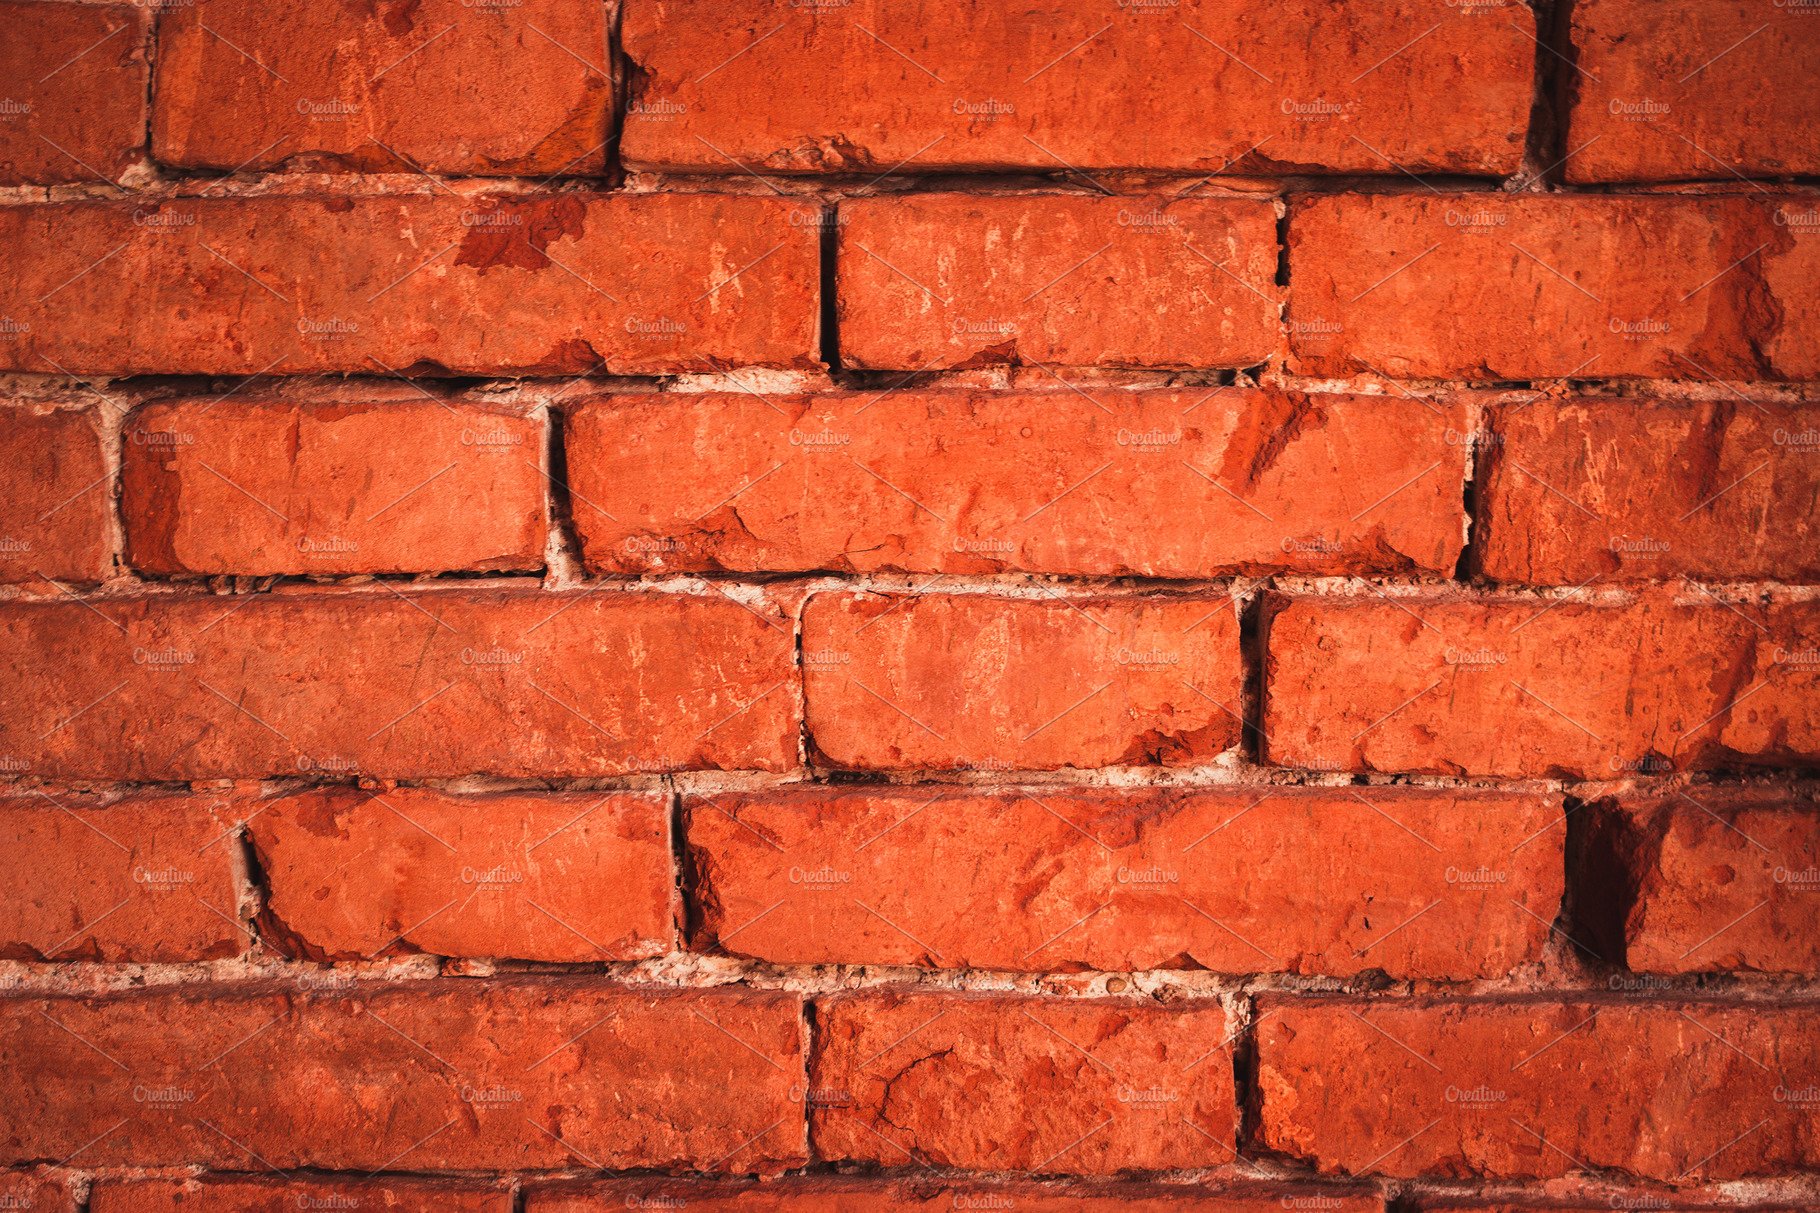 Dark Red Brick Texture cover image.